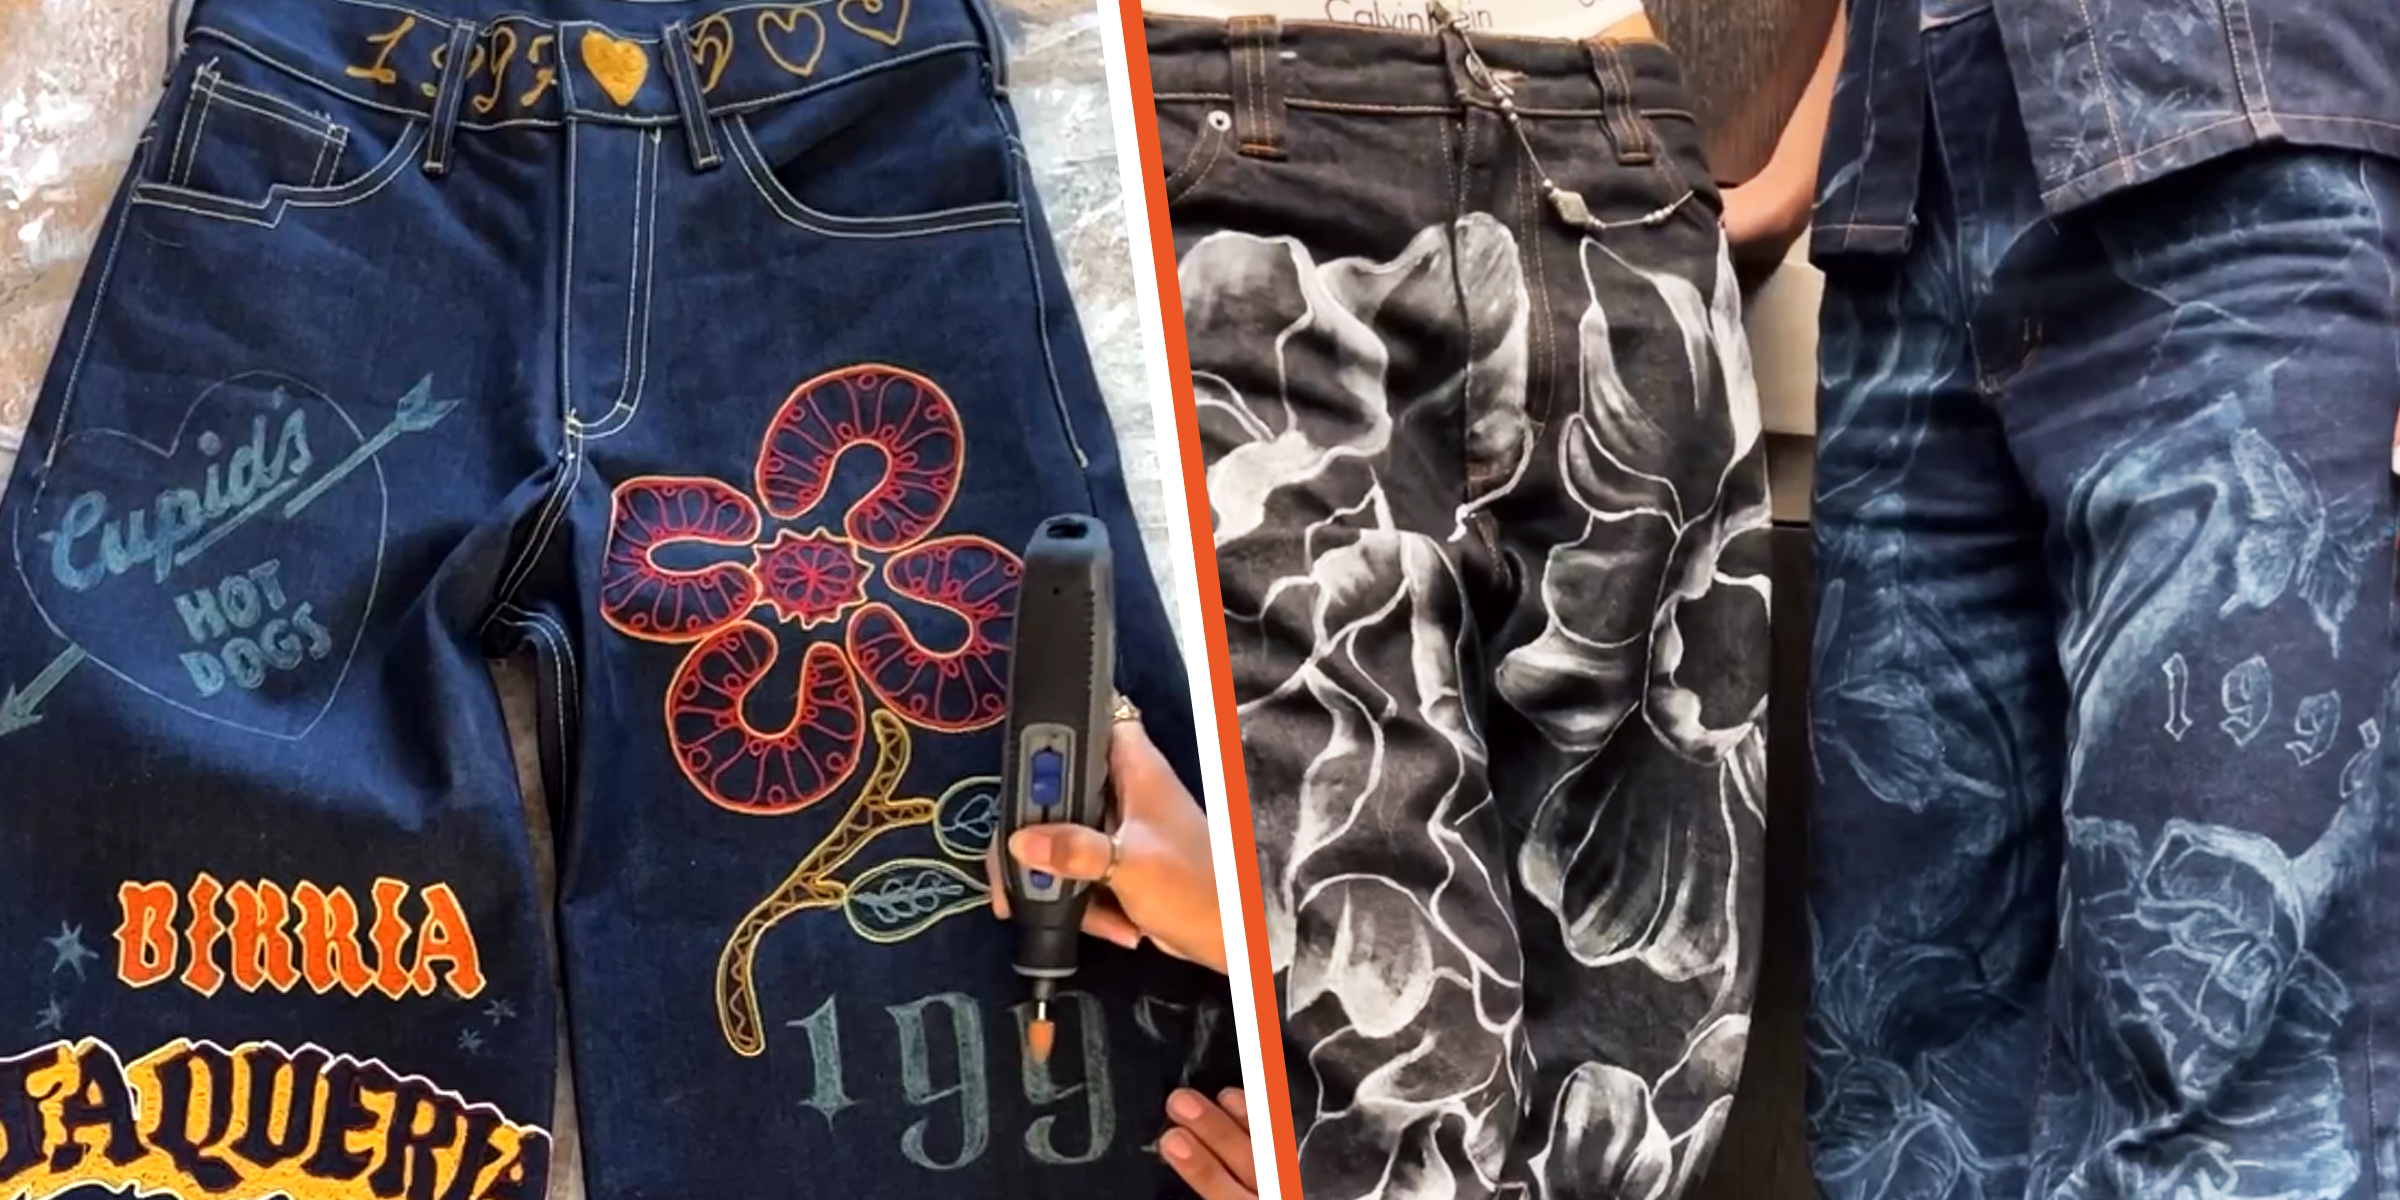 DIY aesthetic painted jeans | Source: Instagram/denem